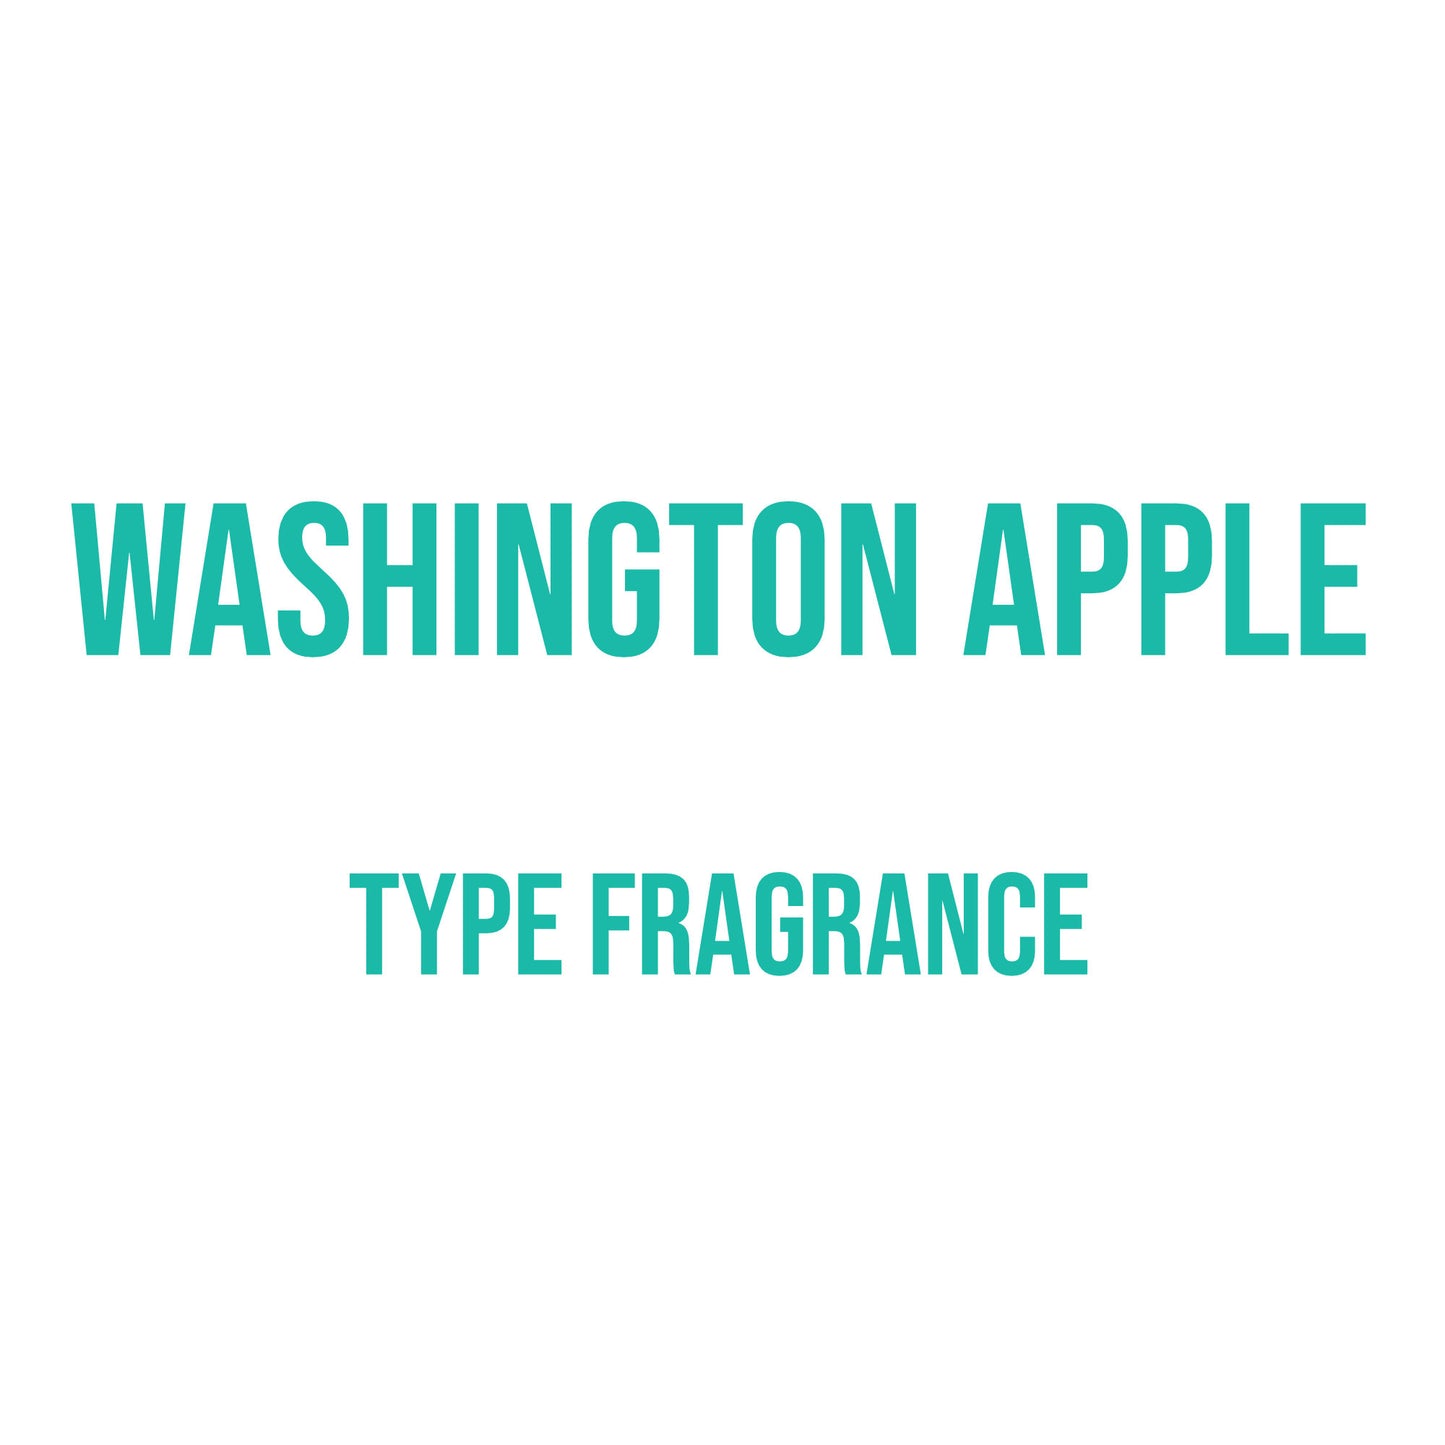 Washington Apple Type Fragrance